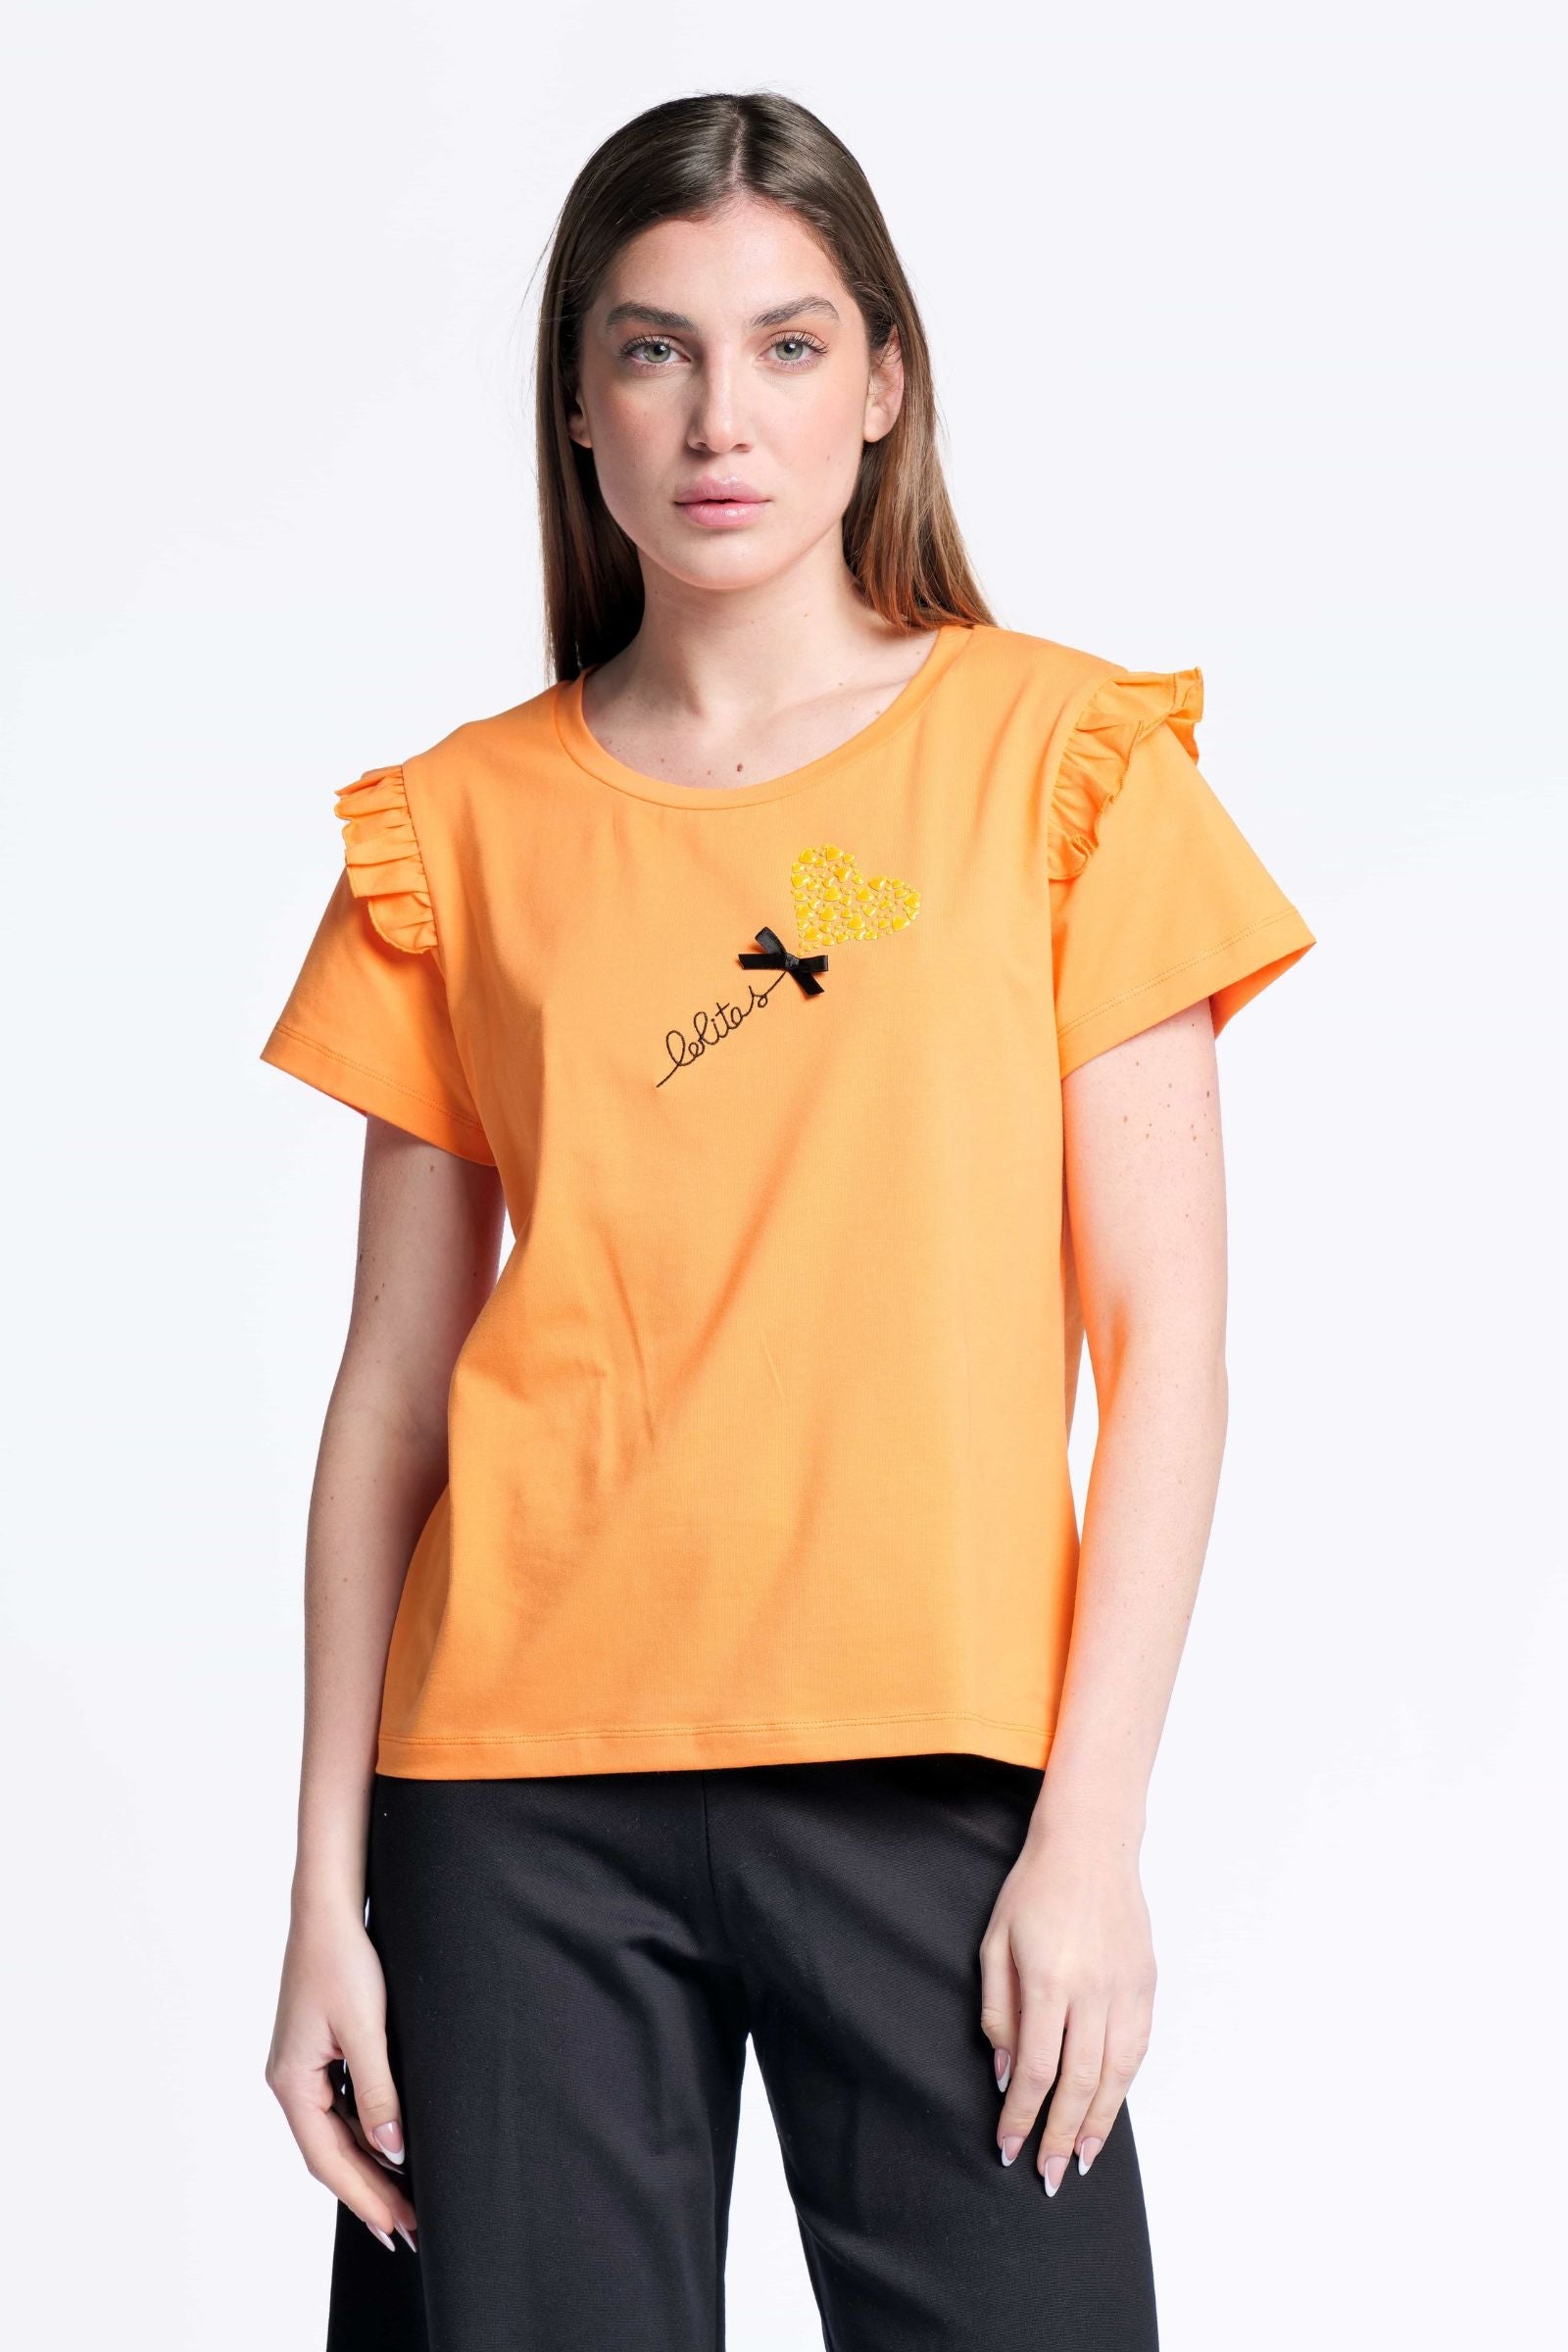 Camiseta naranja algodon bordado logo corazon Lolitas&L - lolitasyl.com